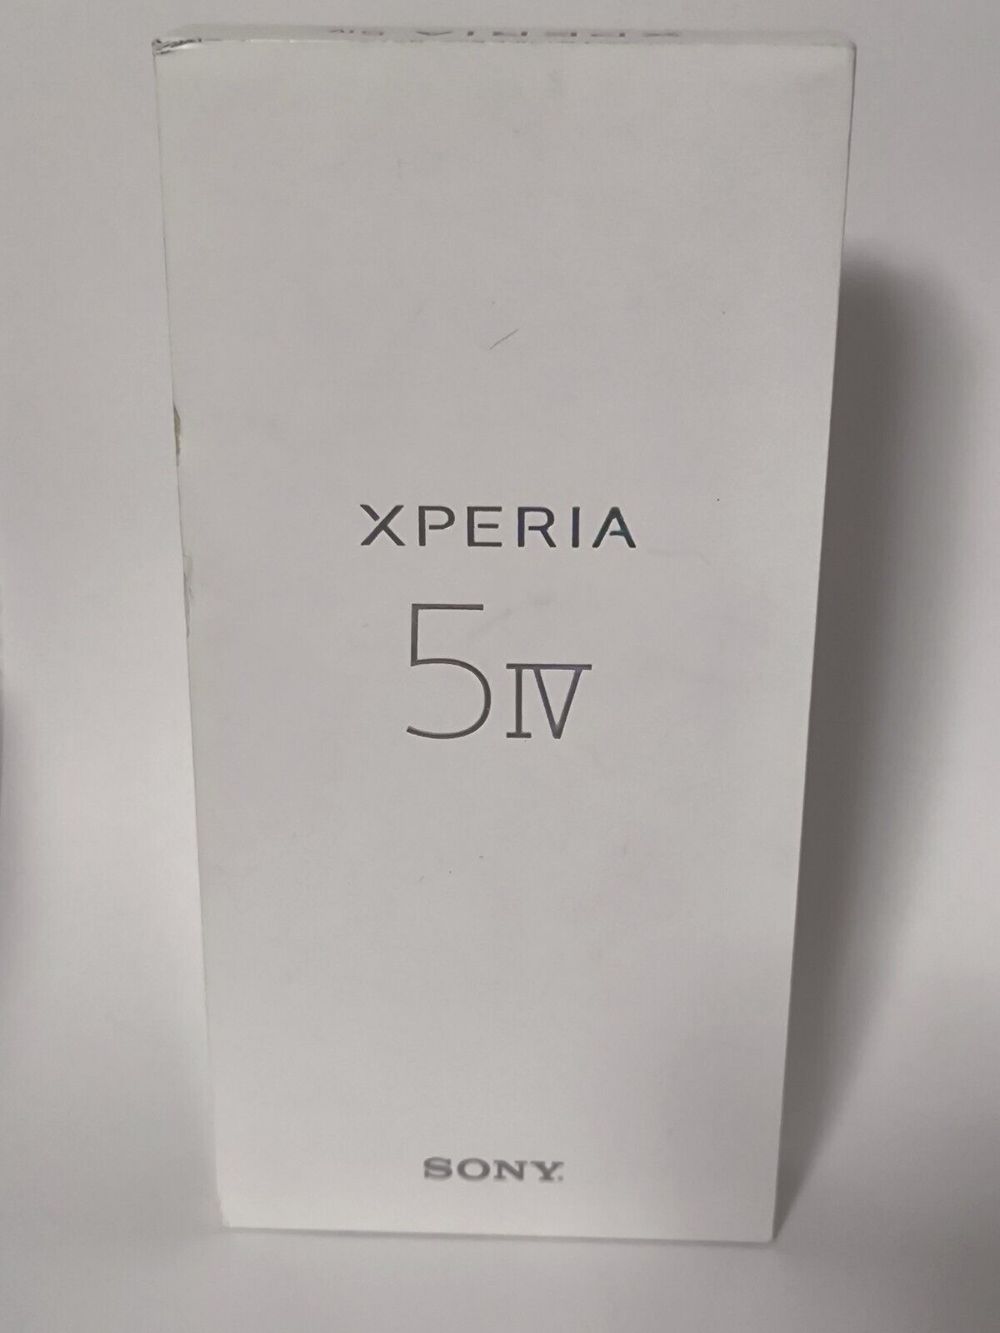  Sony Xperia 5 iv Smartphone